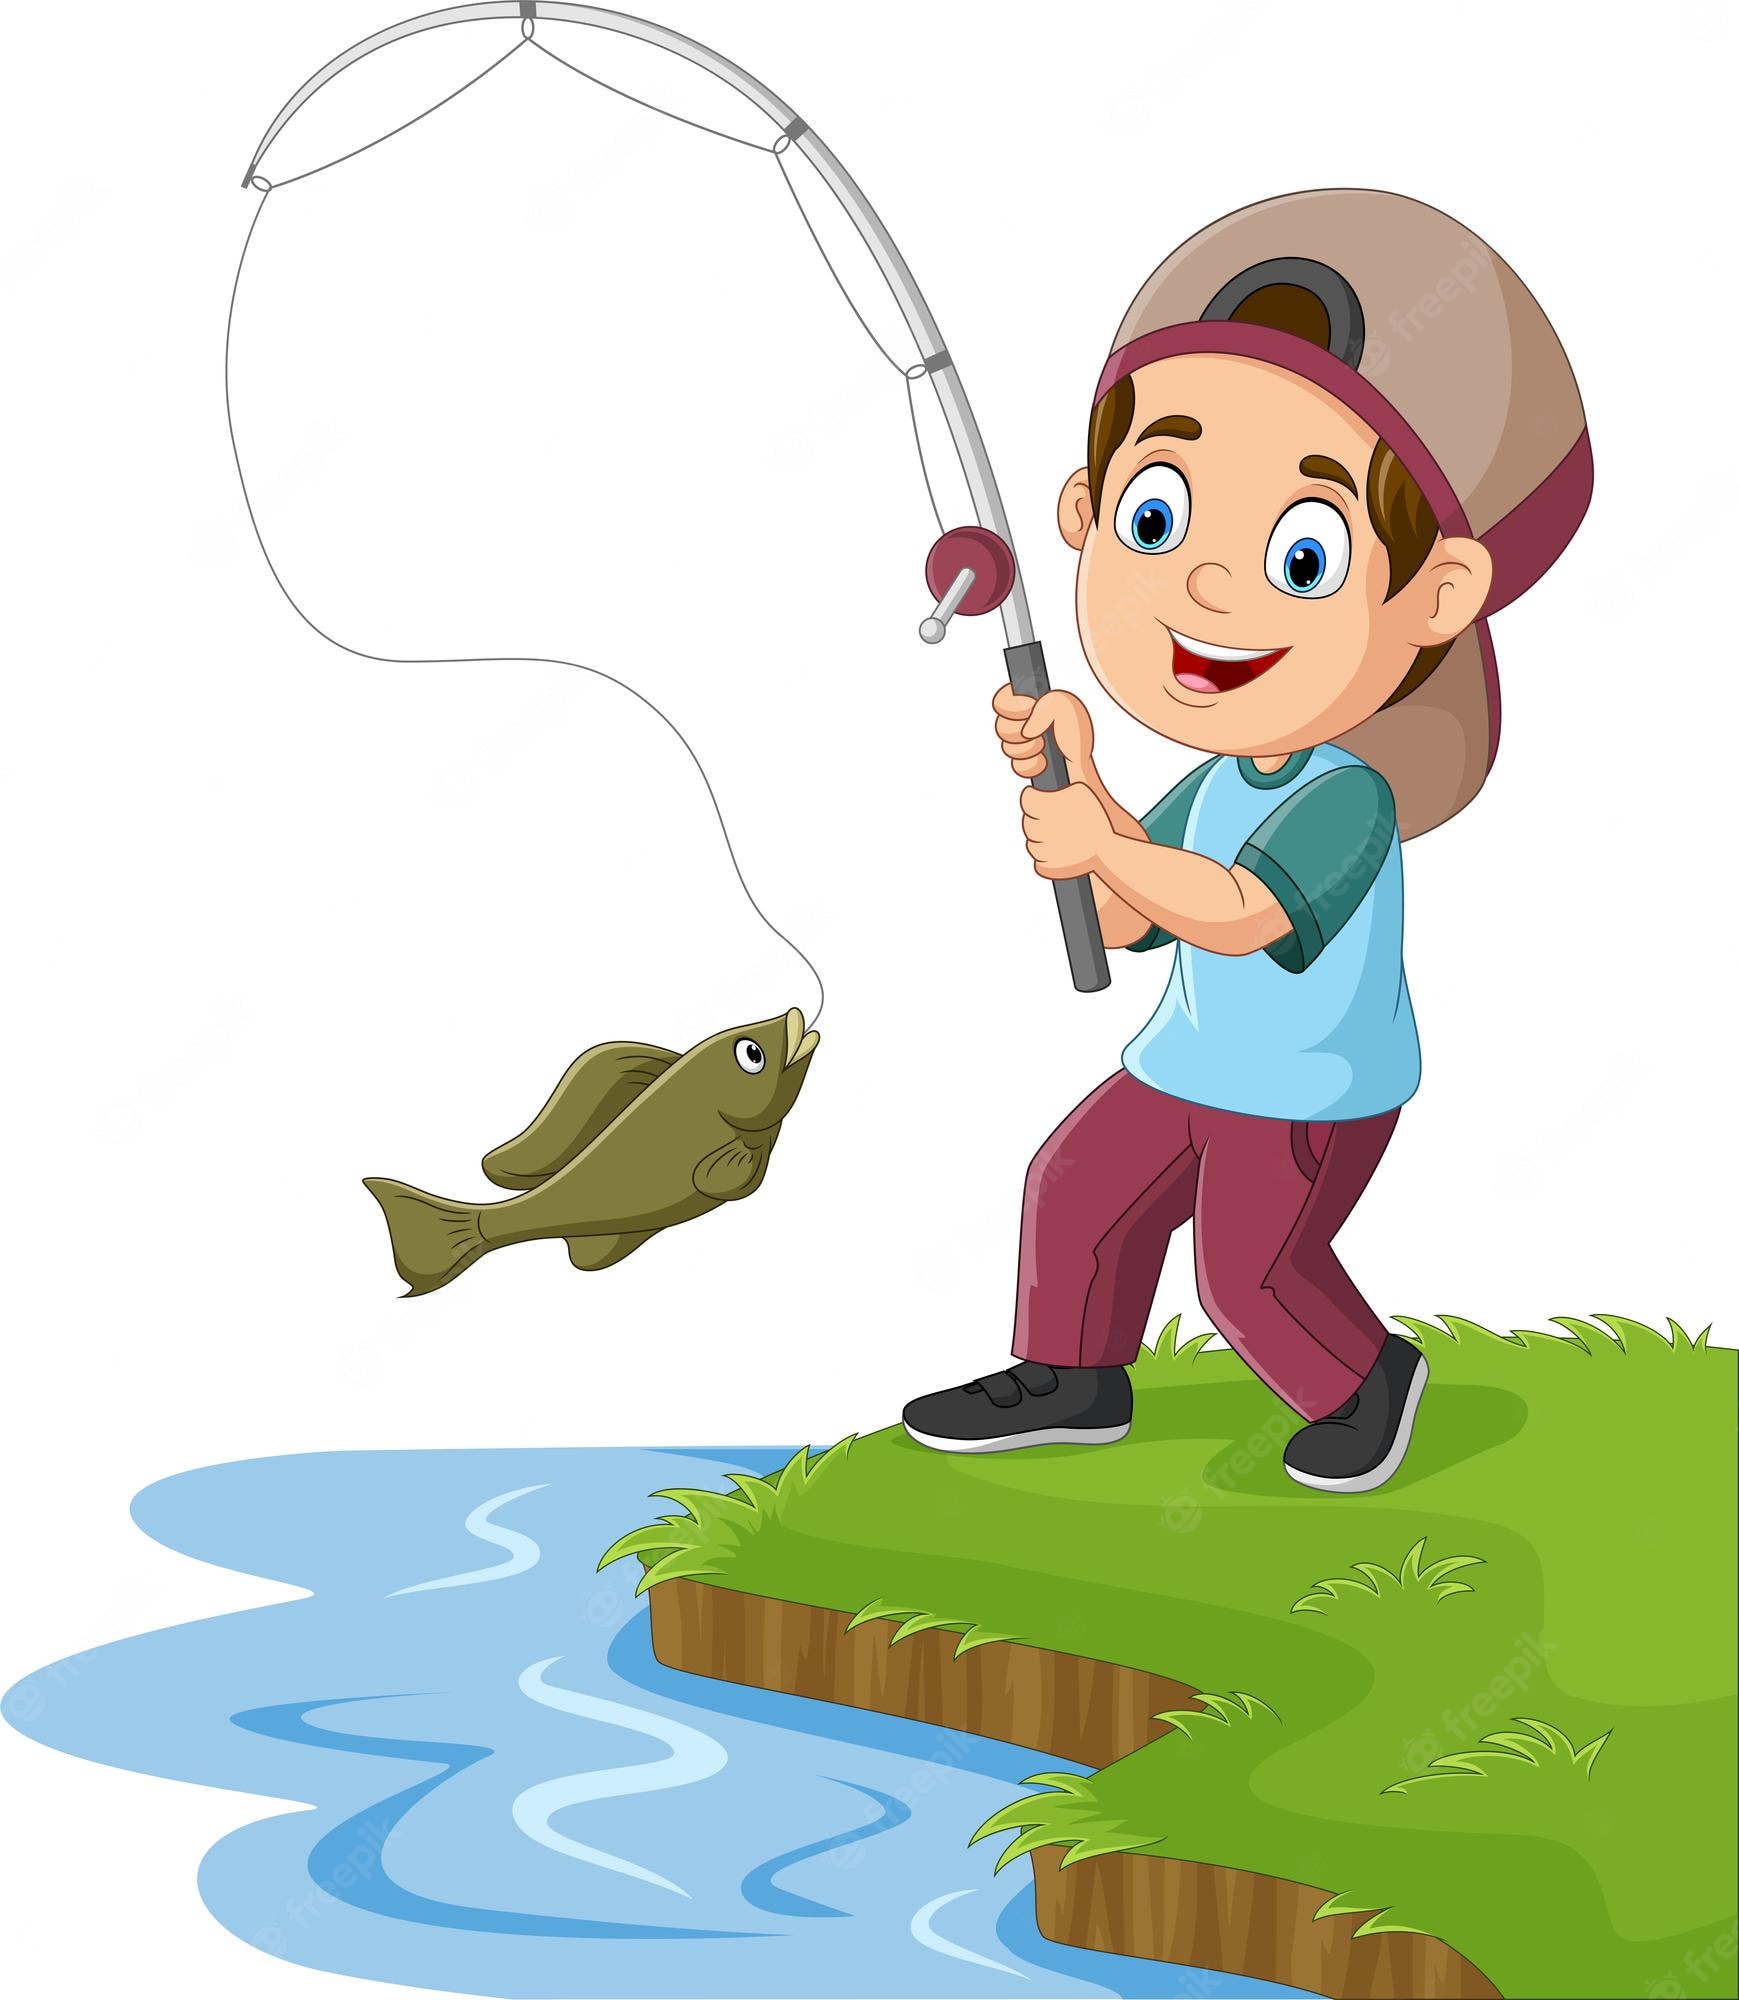 Cartoon Fishing Pole Images - Free Download on Freepik